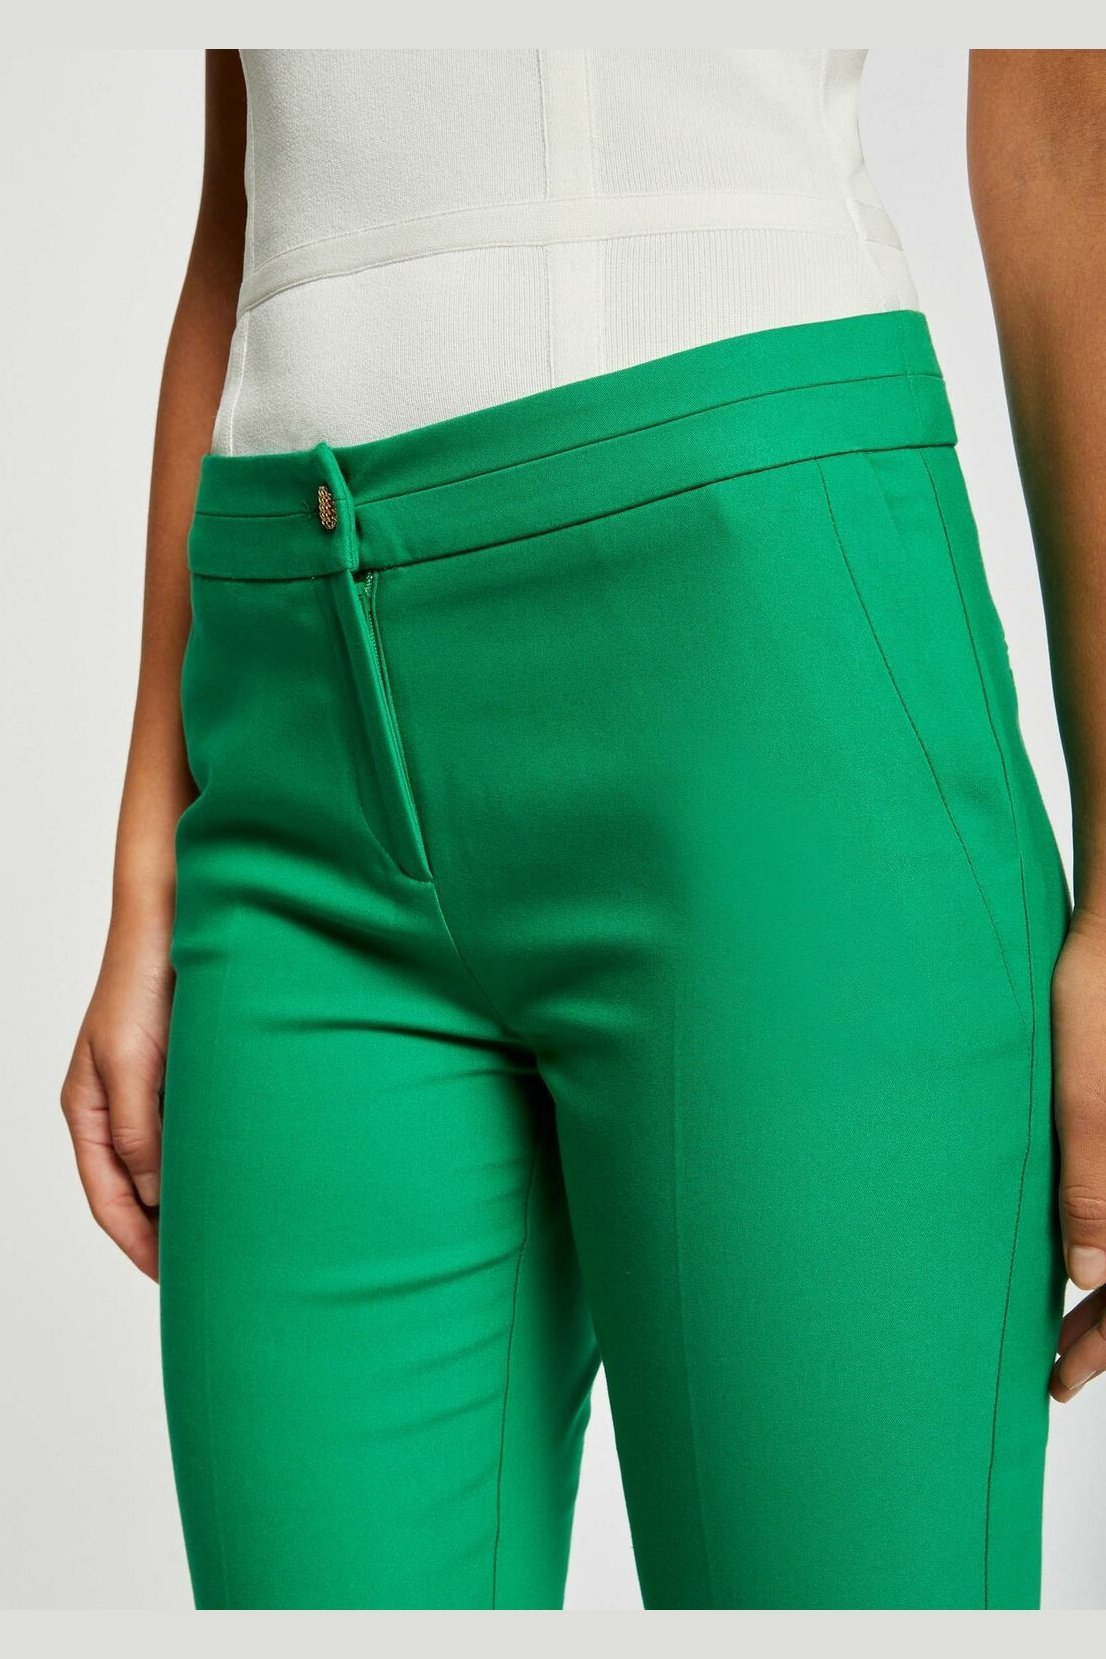 MORGAN - מכנס ארוך מחויט בצבע ירוק - MASHBIR//365